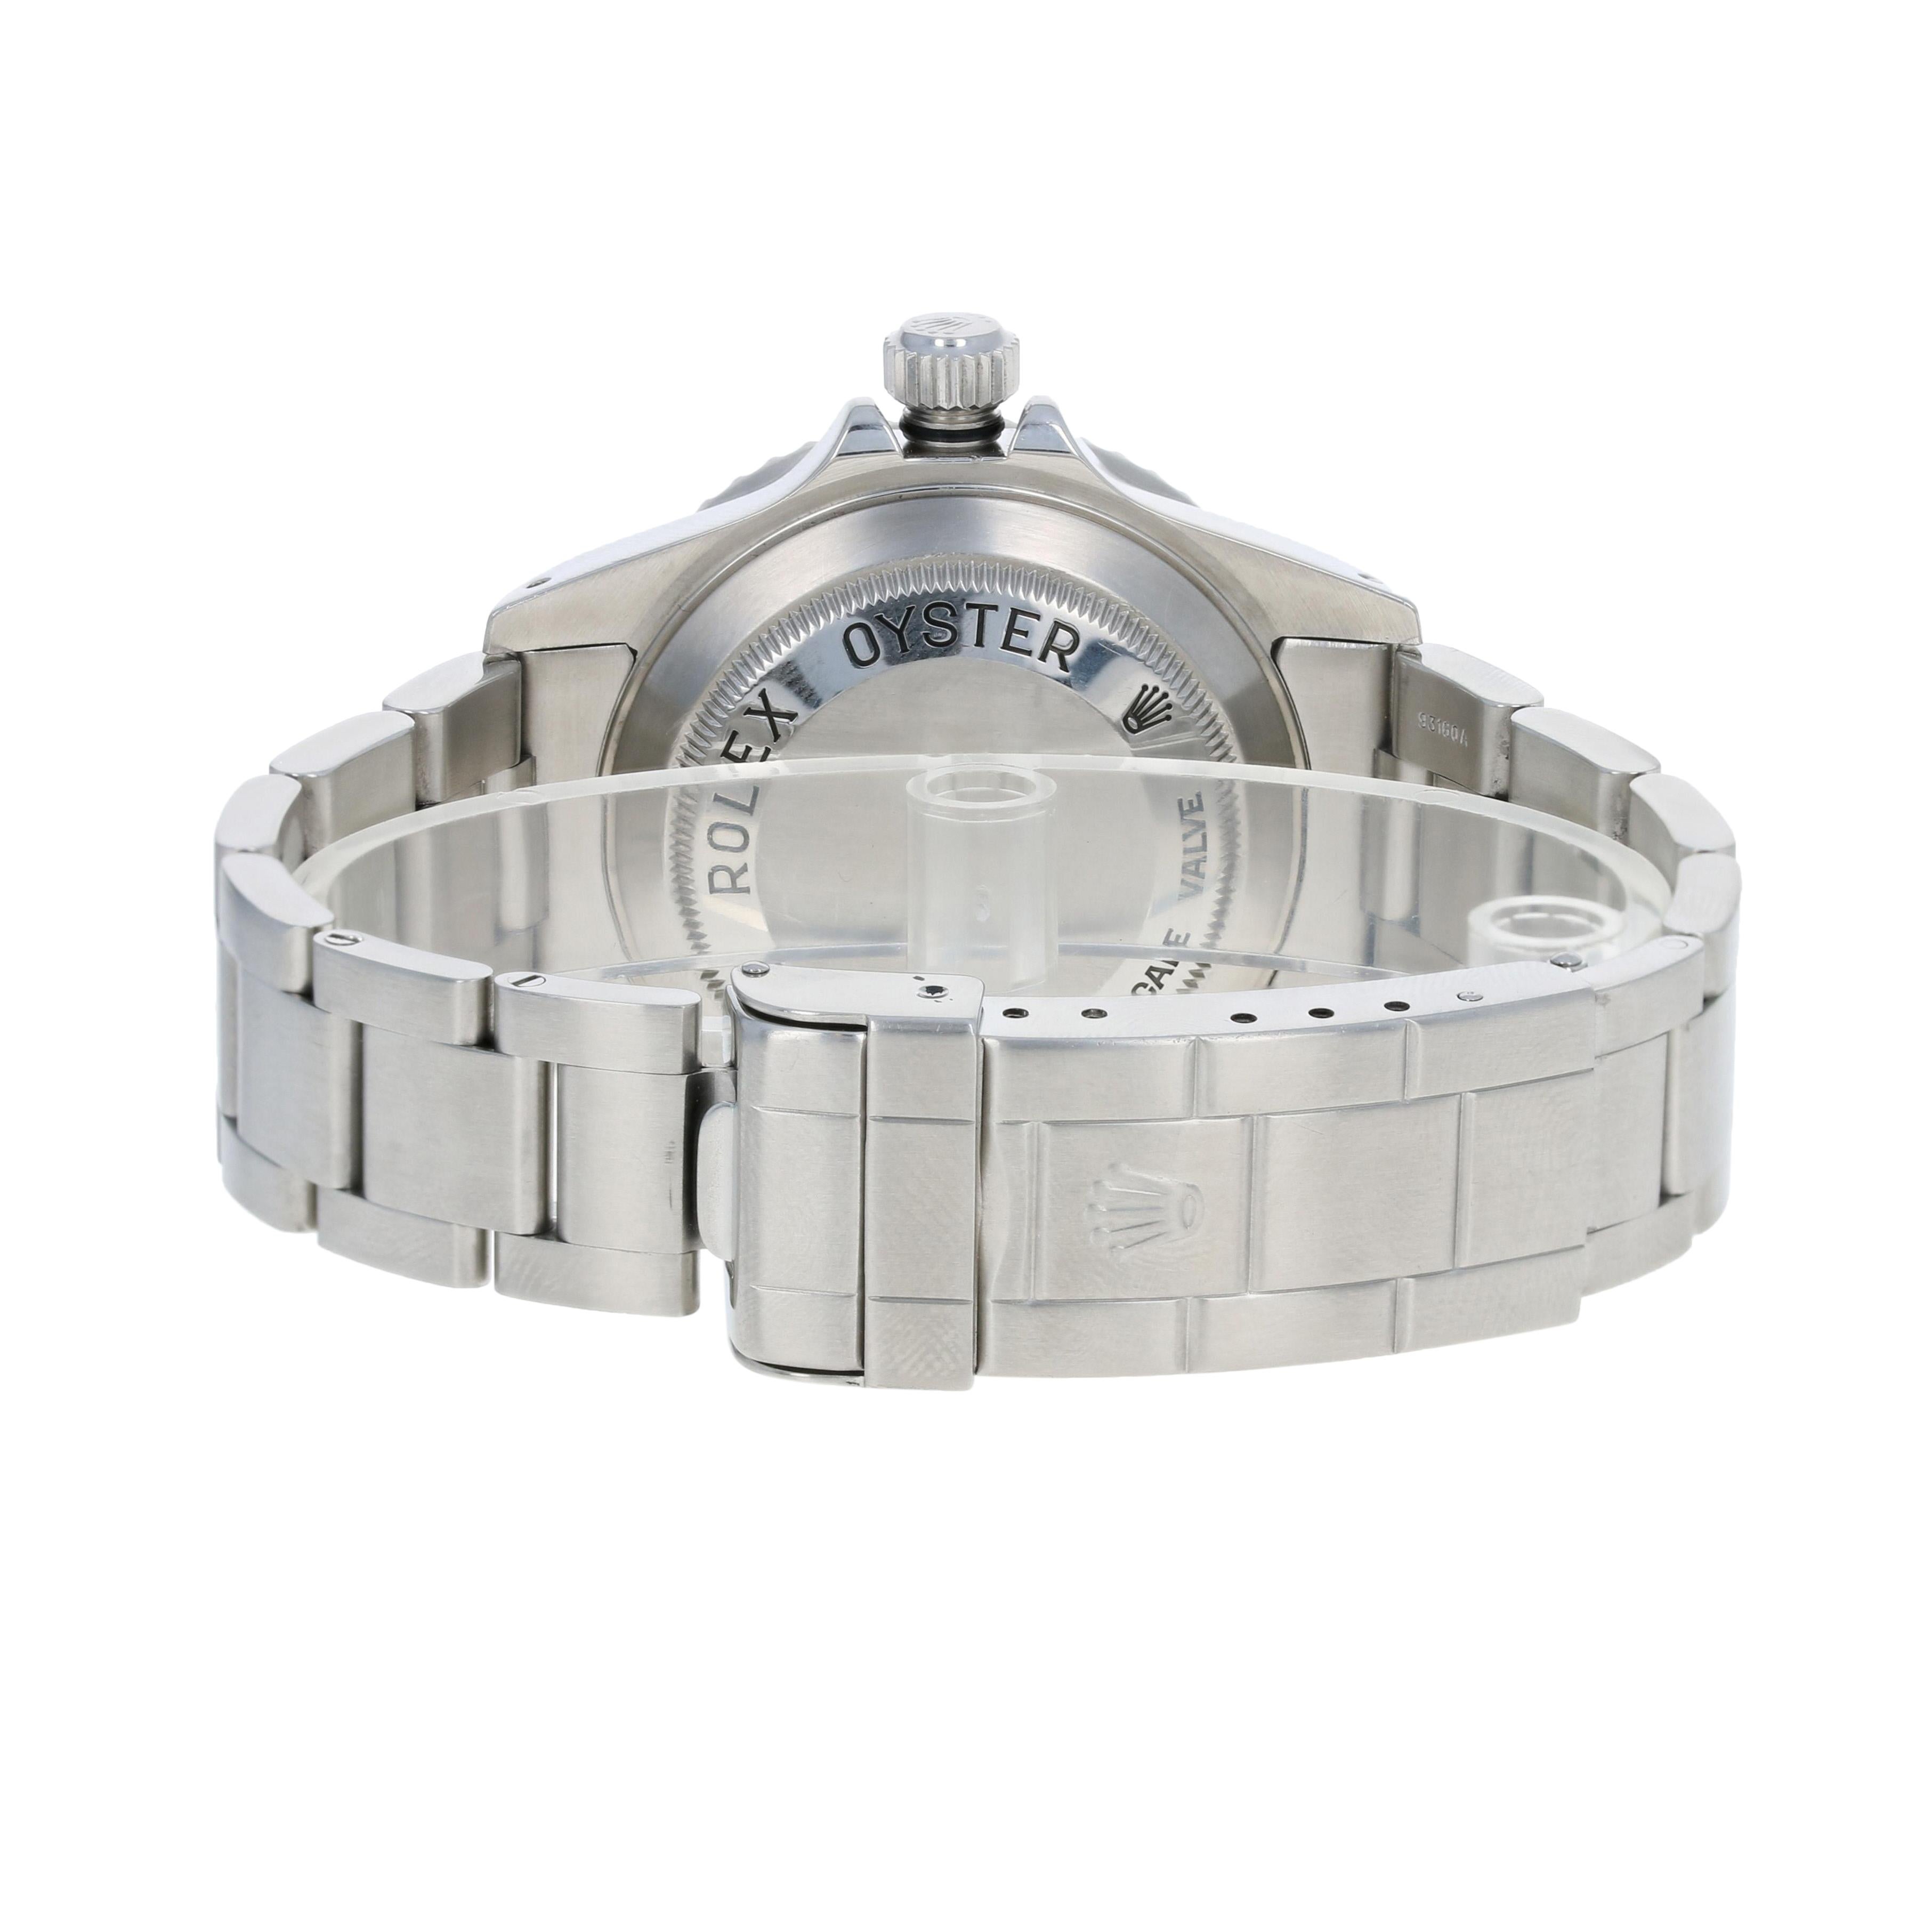 Rolex Sea-Dweller Men's Watch, Stainless Steel Automatic 2 Yr Wnty w/ Box 16600 2